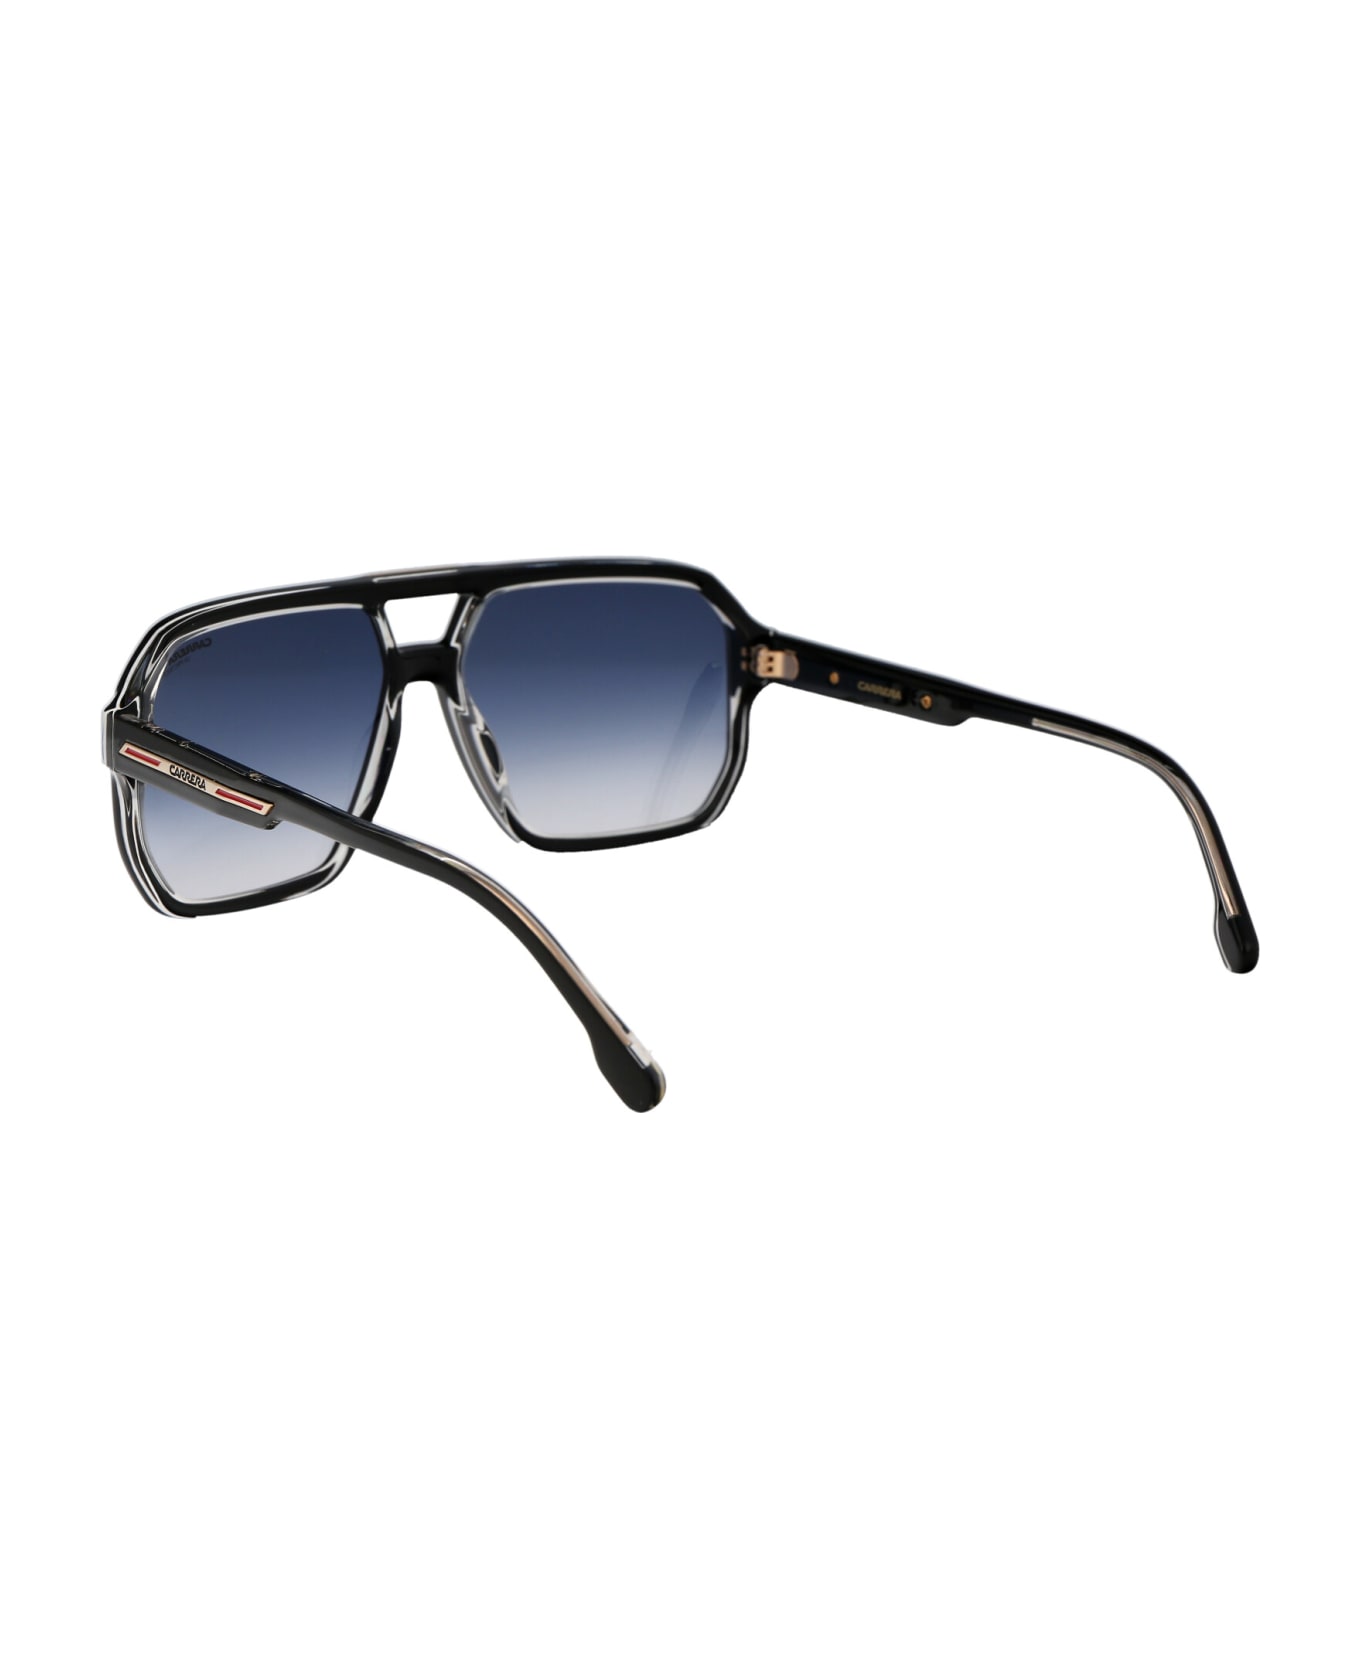 Carrera Victory C 01/s Sunglasses - EI708 BLACK CRY_